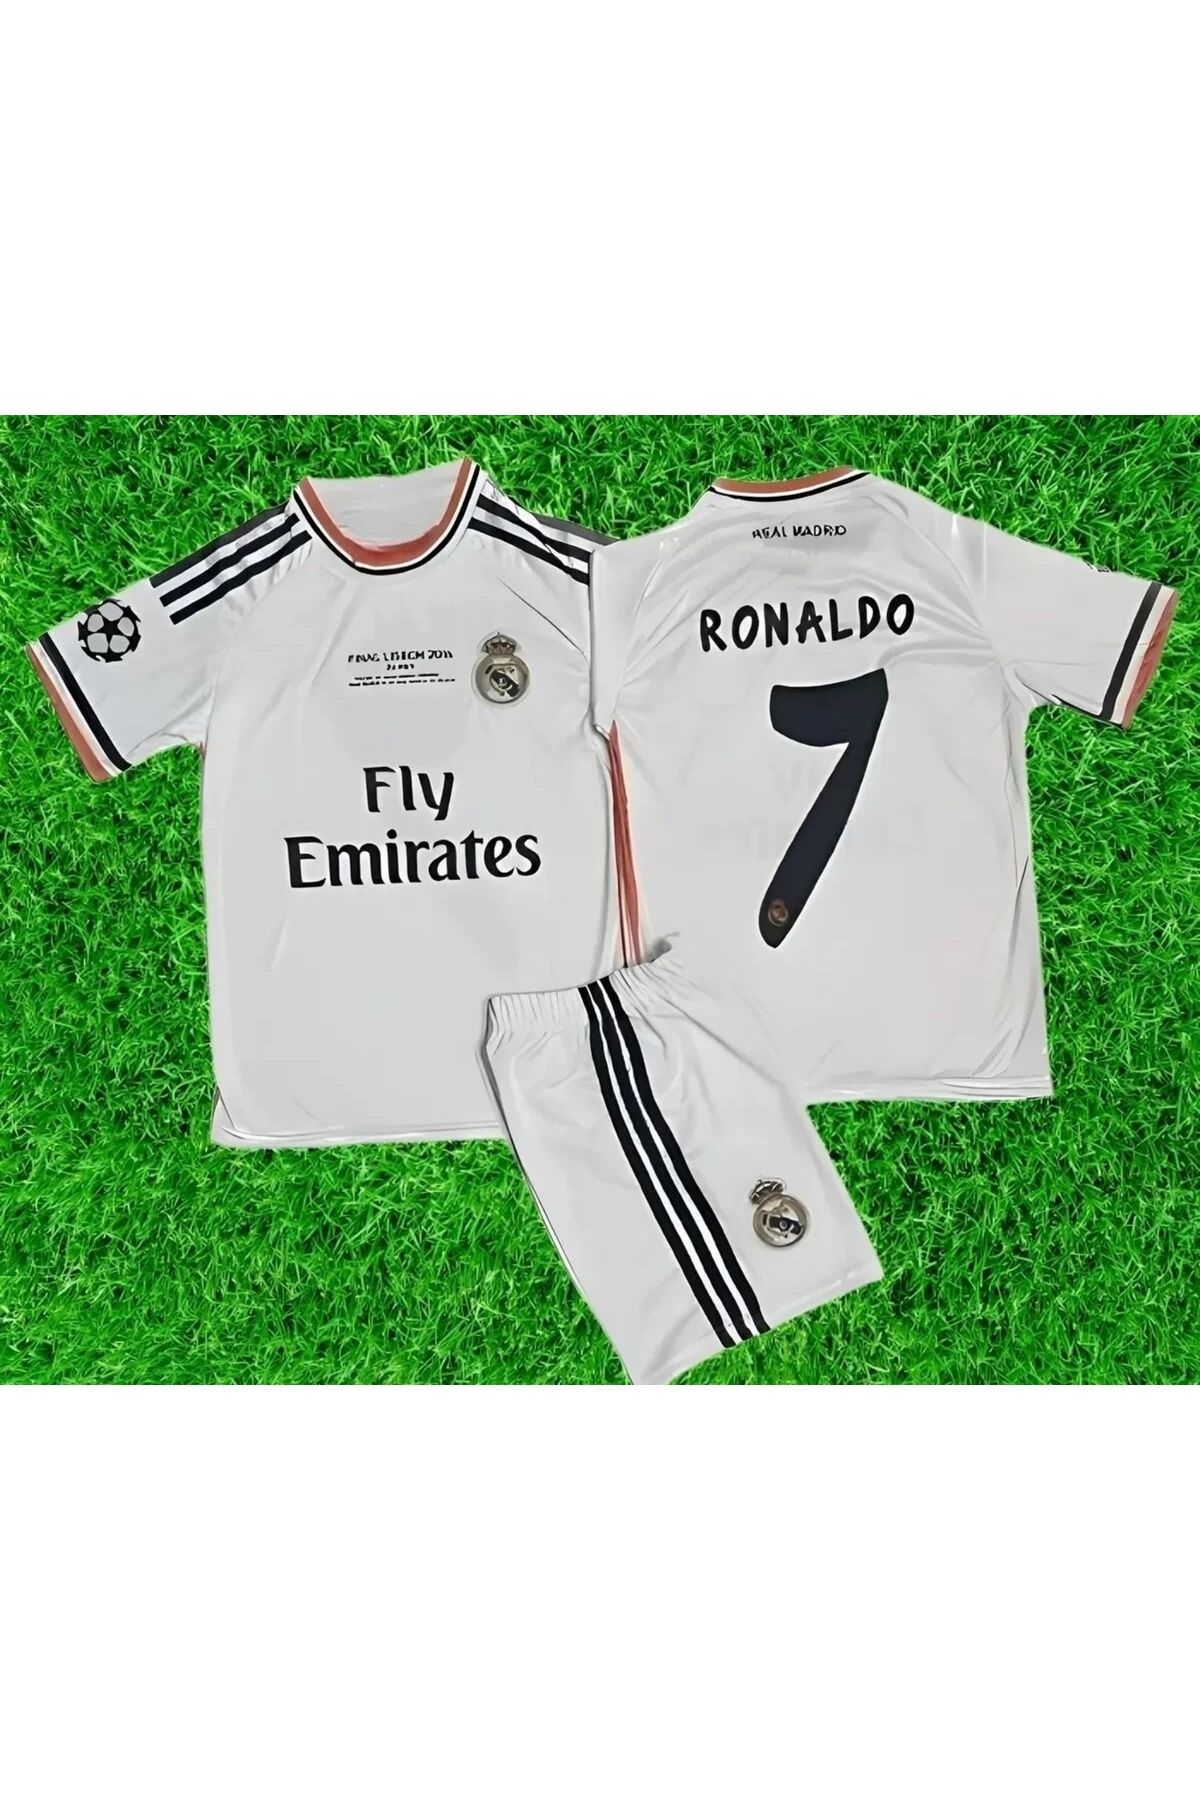 yenteks Ronaldo 4real Madrid Efsane 2014 Lisbon 4 Lü Set Çocuk Forması Finali Ylç56